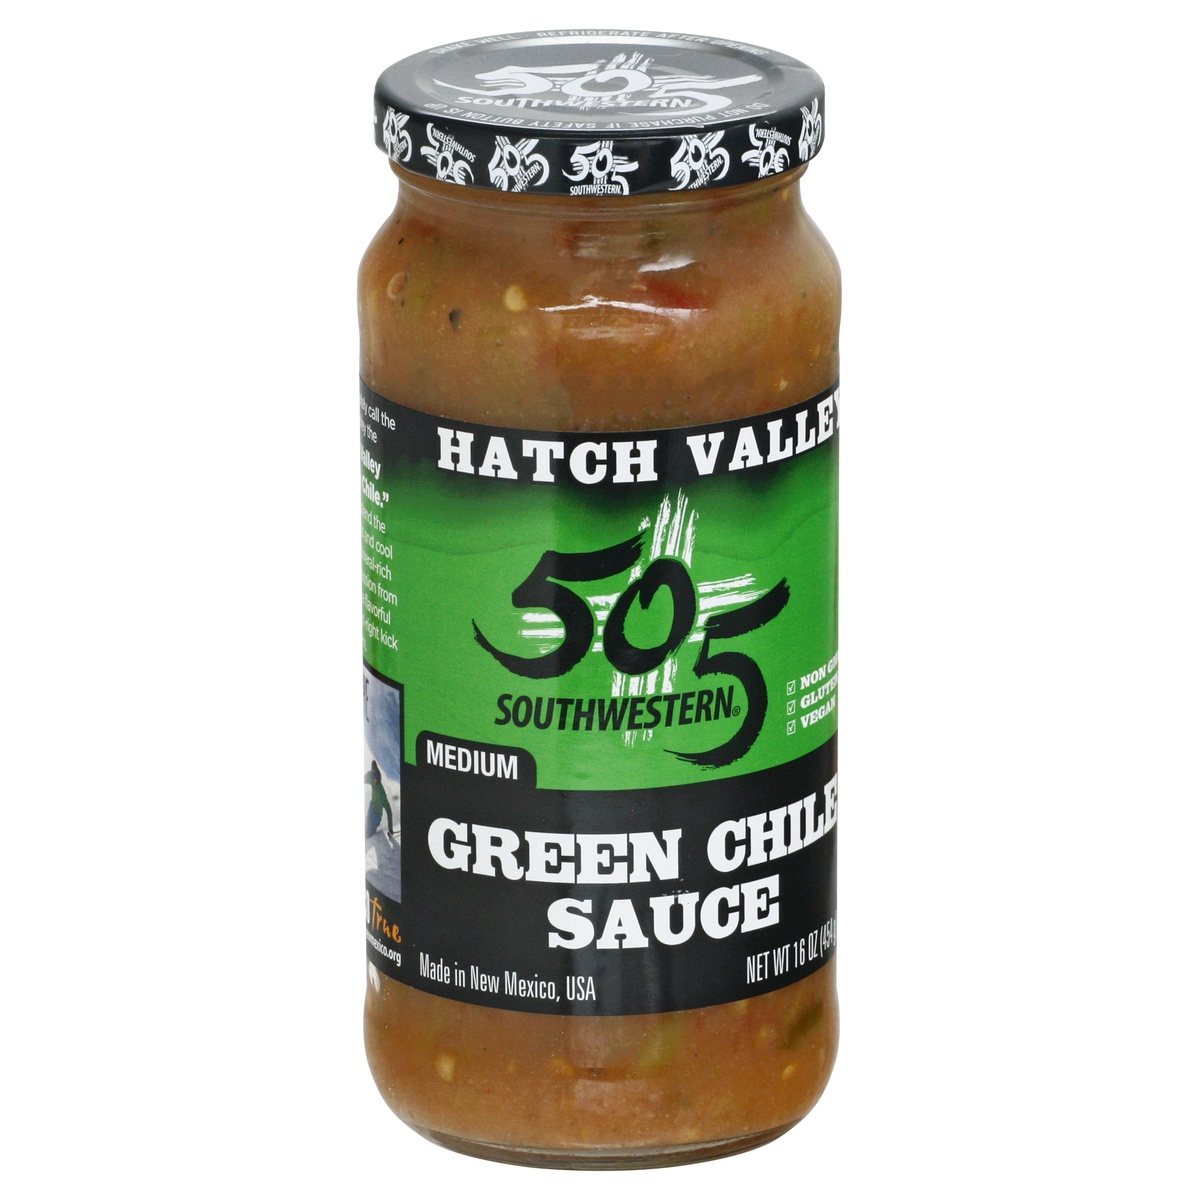 slide 2 of 10, 505 Southwestern Medium Hatch Valley Green Chile Sauce, 16 oz